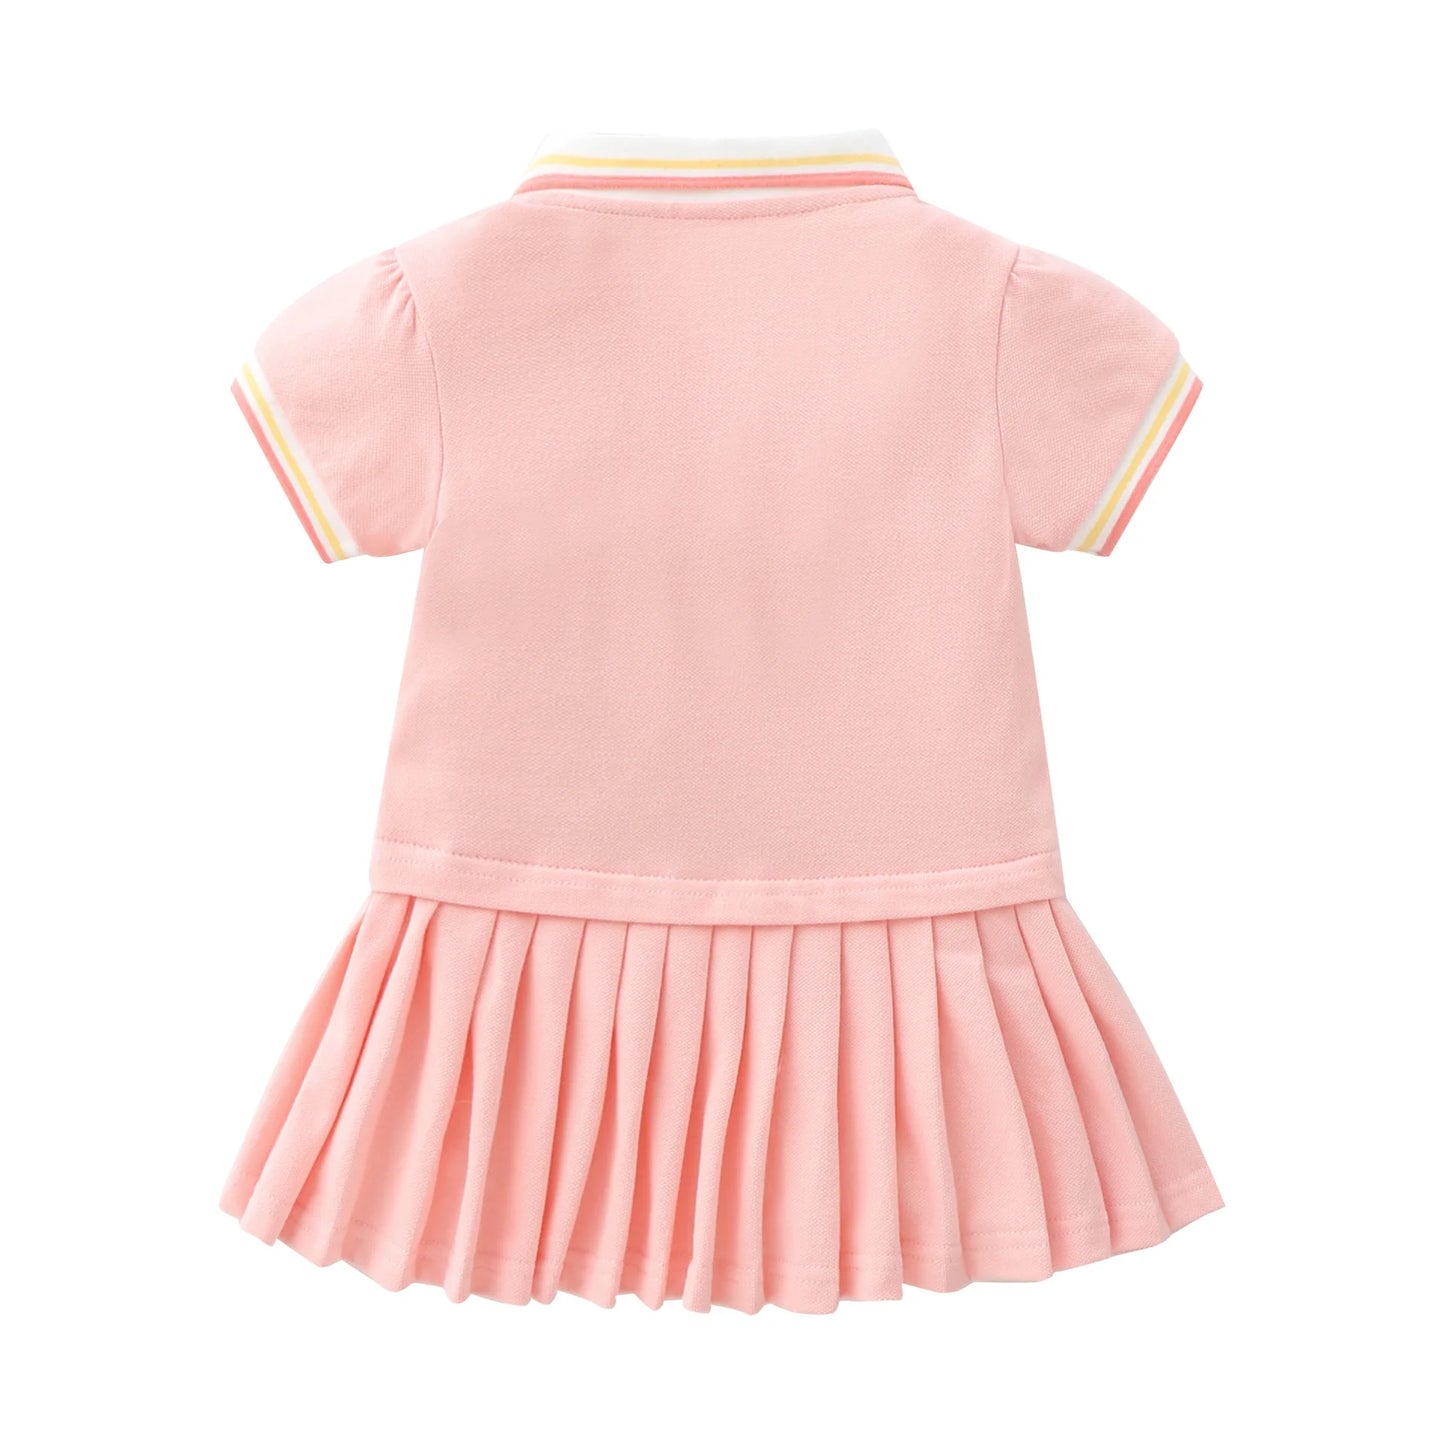 Girls Baby Pink Polo Summer Dress